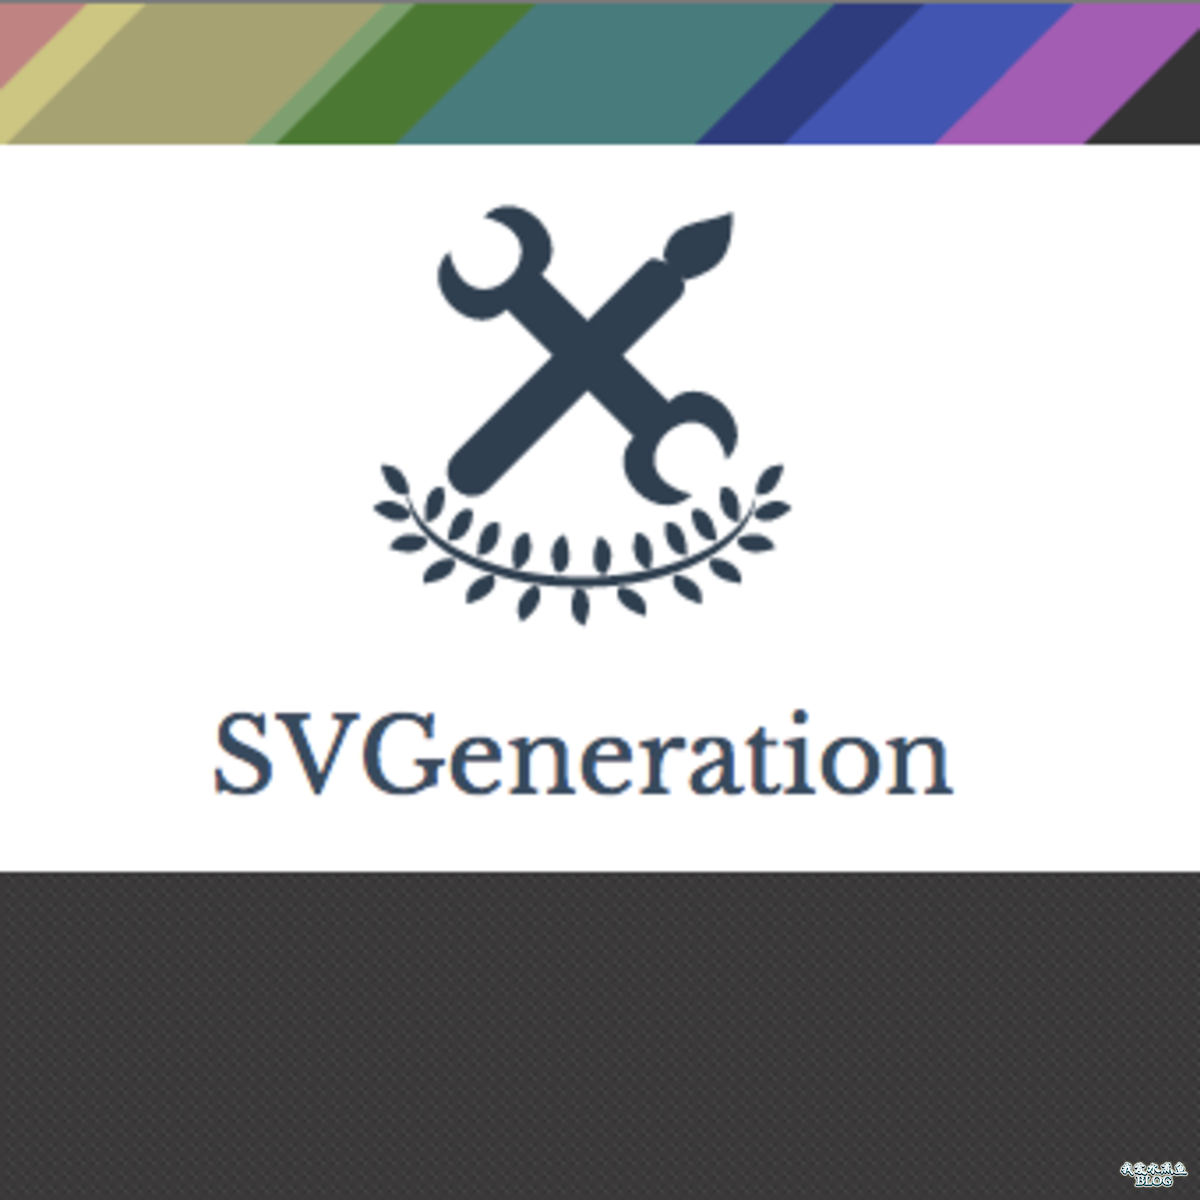 使用 SVGeneration 生成 SVG 格式的背景图片